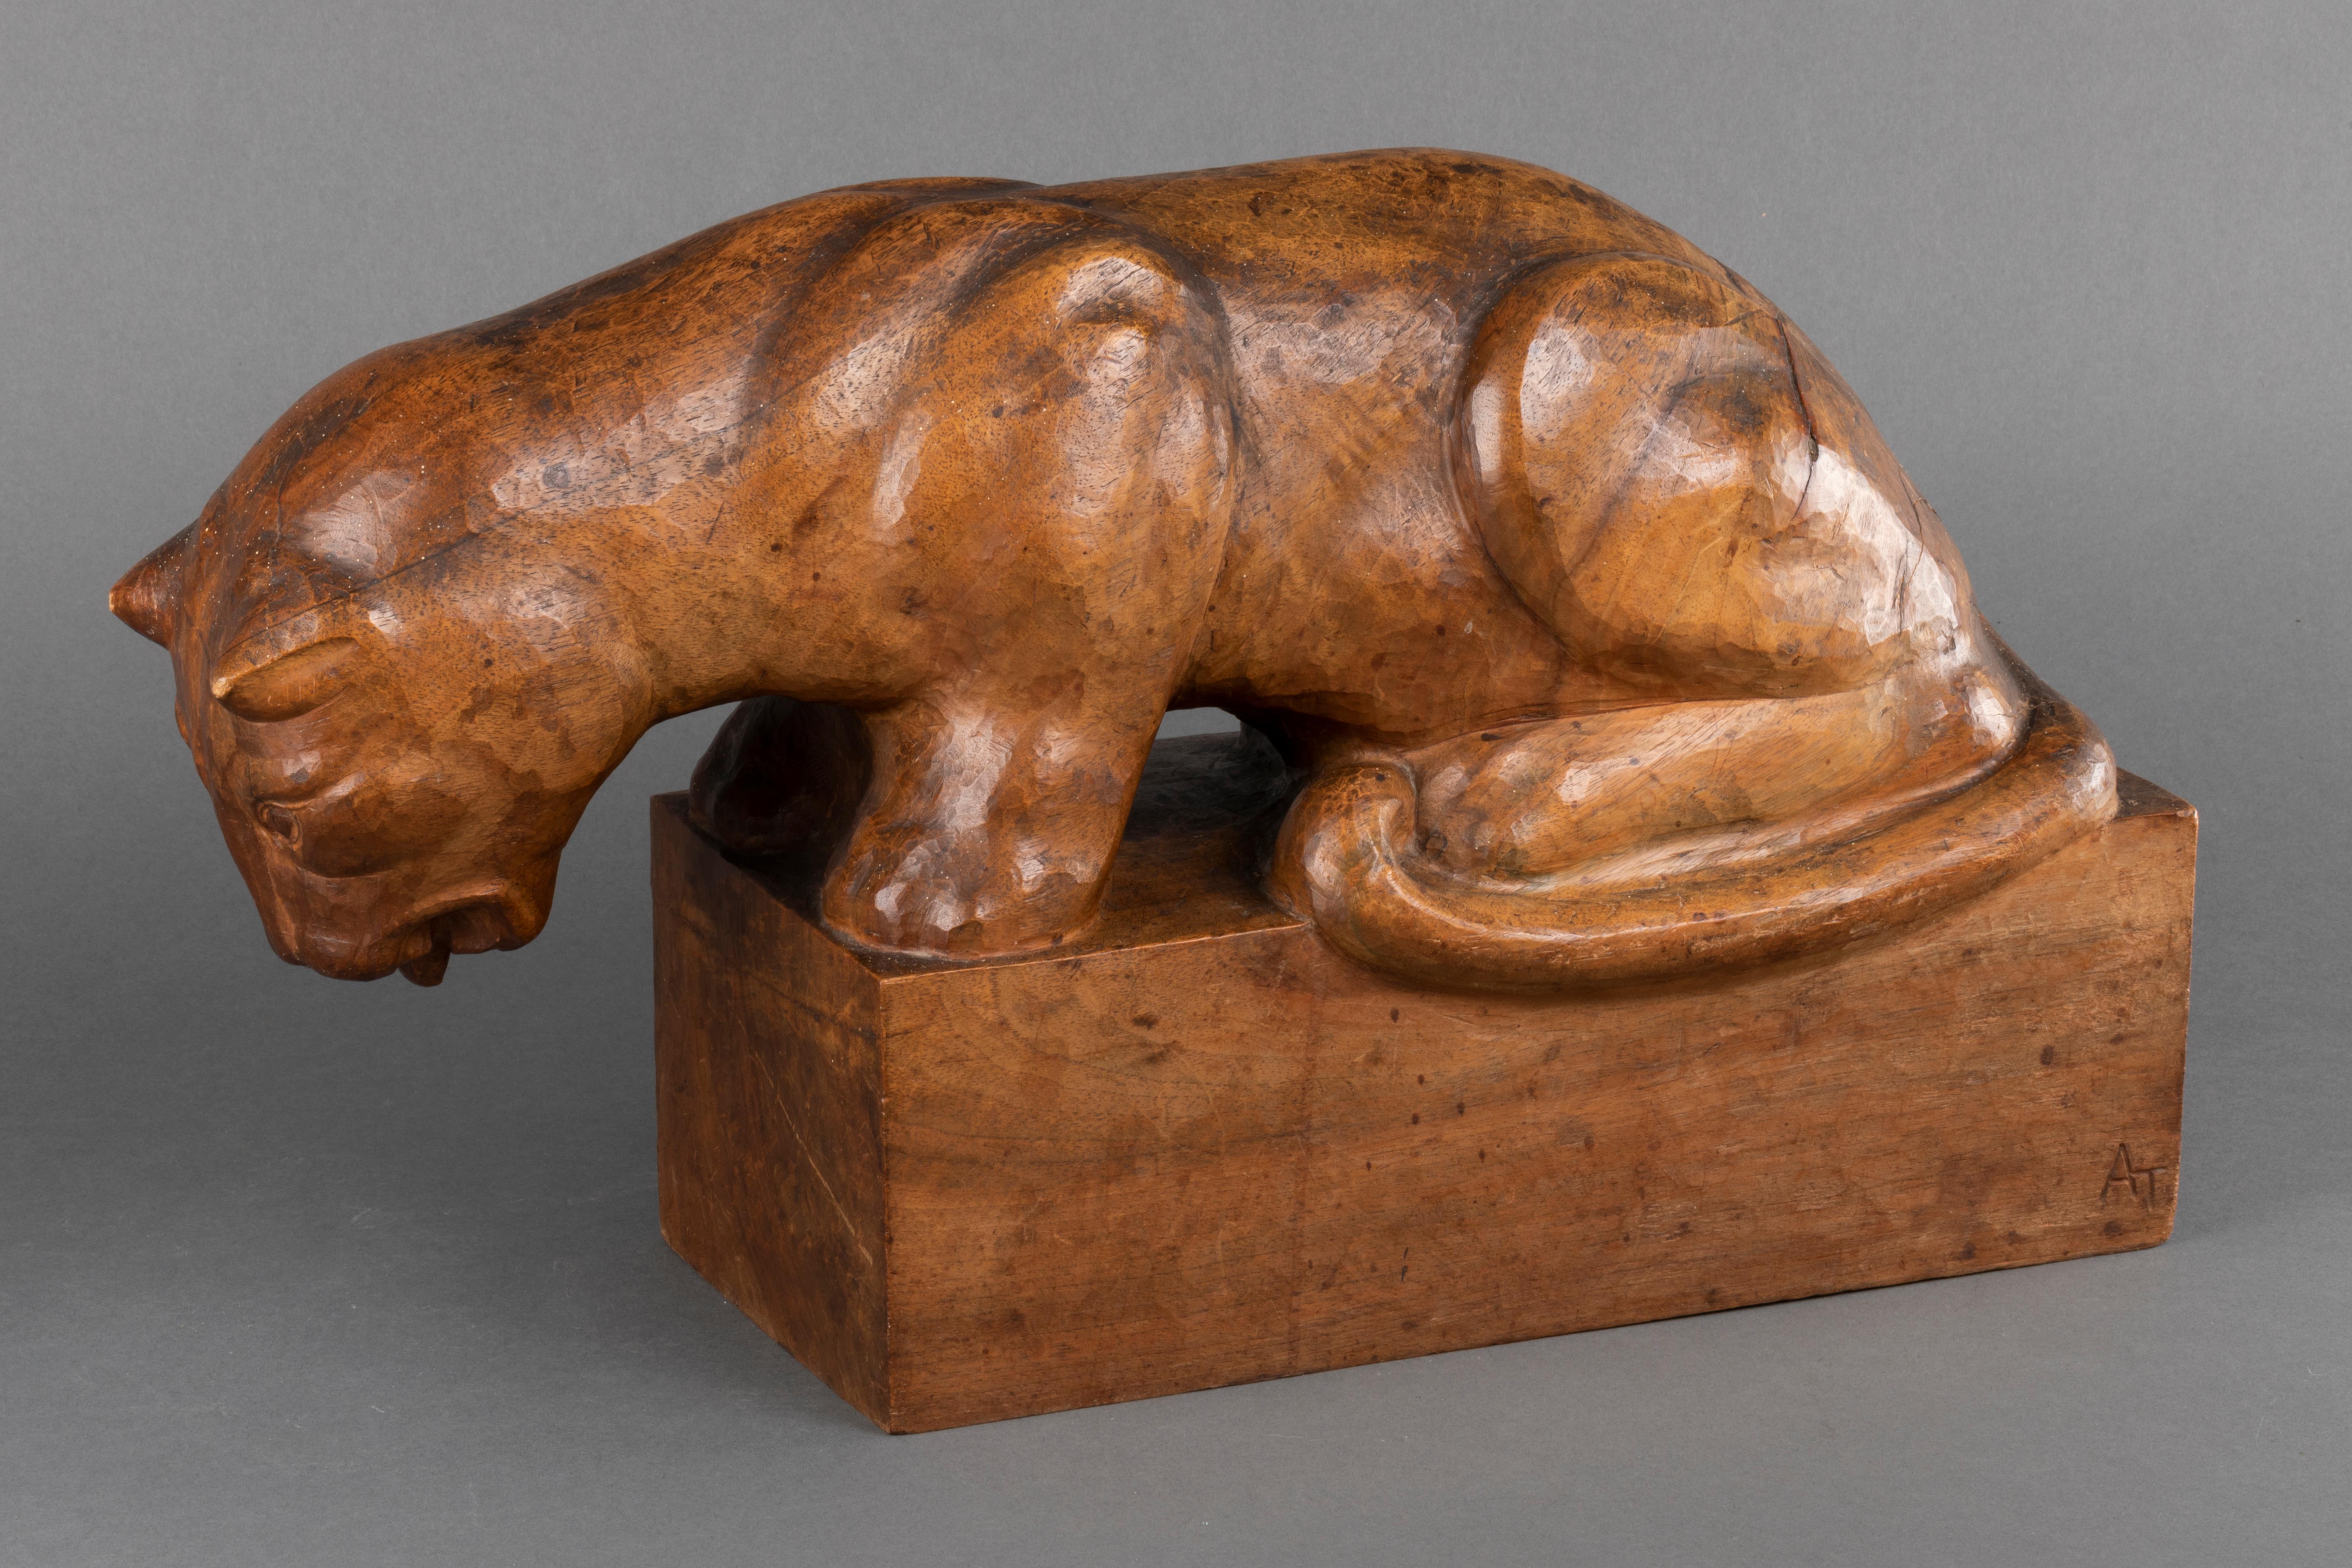 Patinated Auguste Trémont(attrib.) : Lion cub drinking, carved wood sculpture c.1950 For Sale